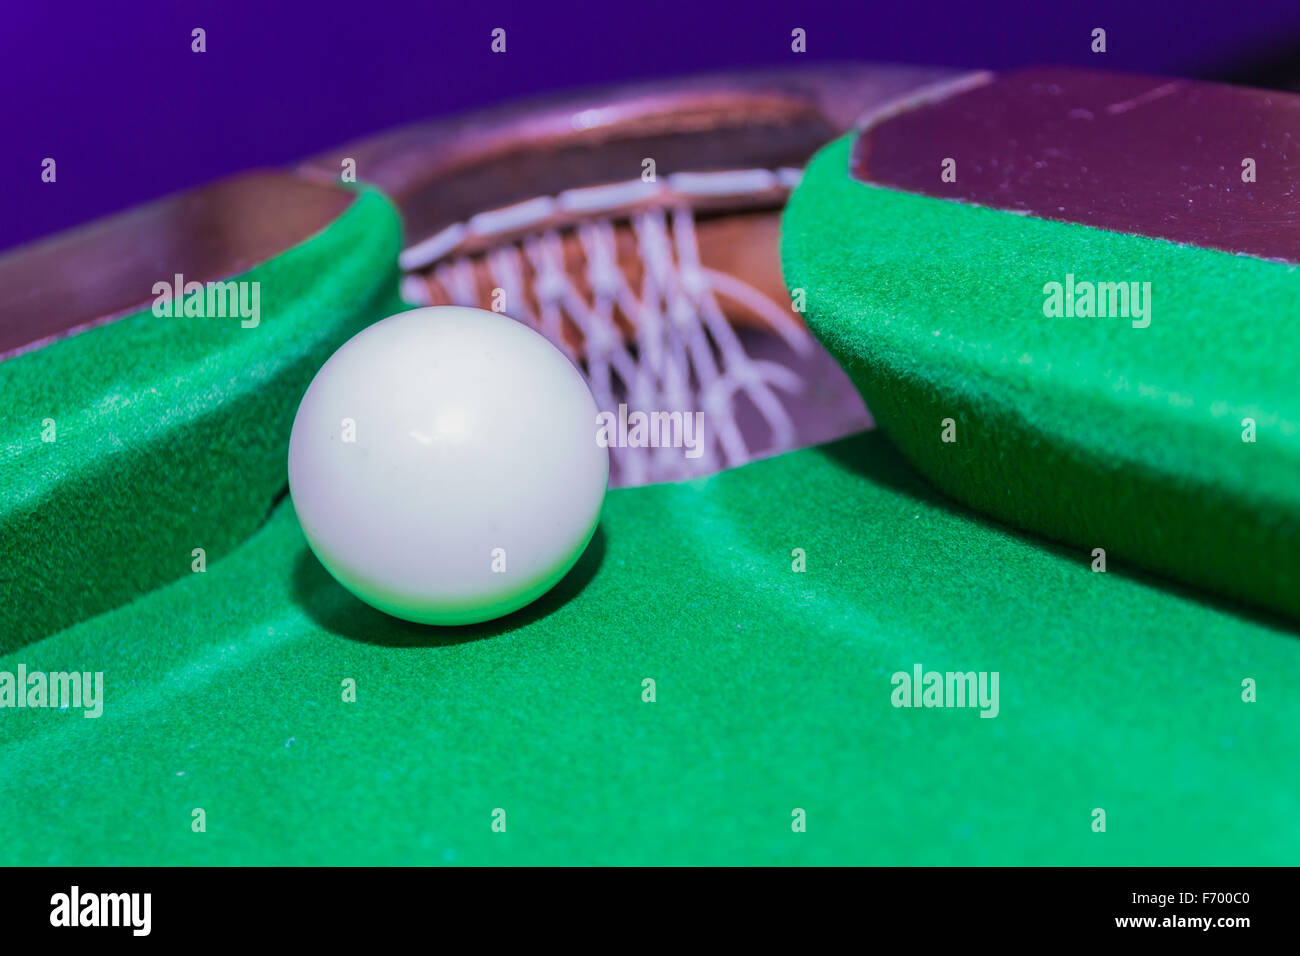 Snooker ball on snooker table Stock Photo